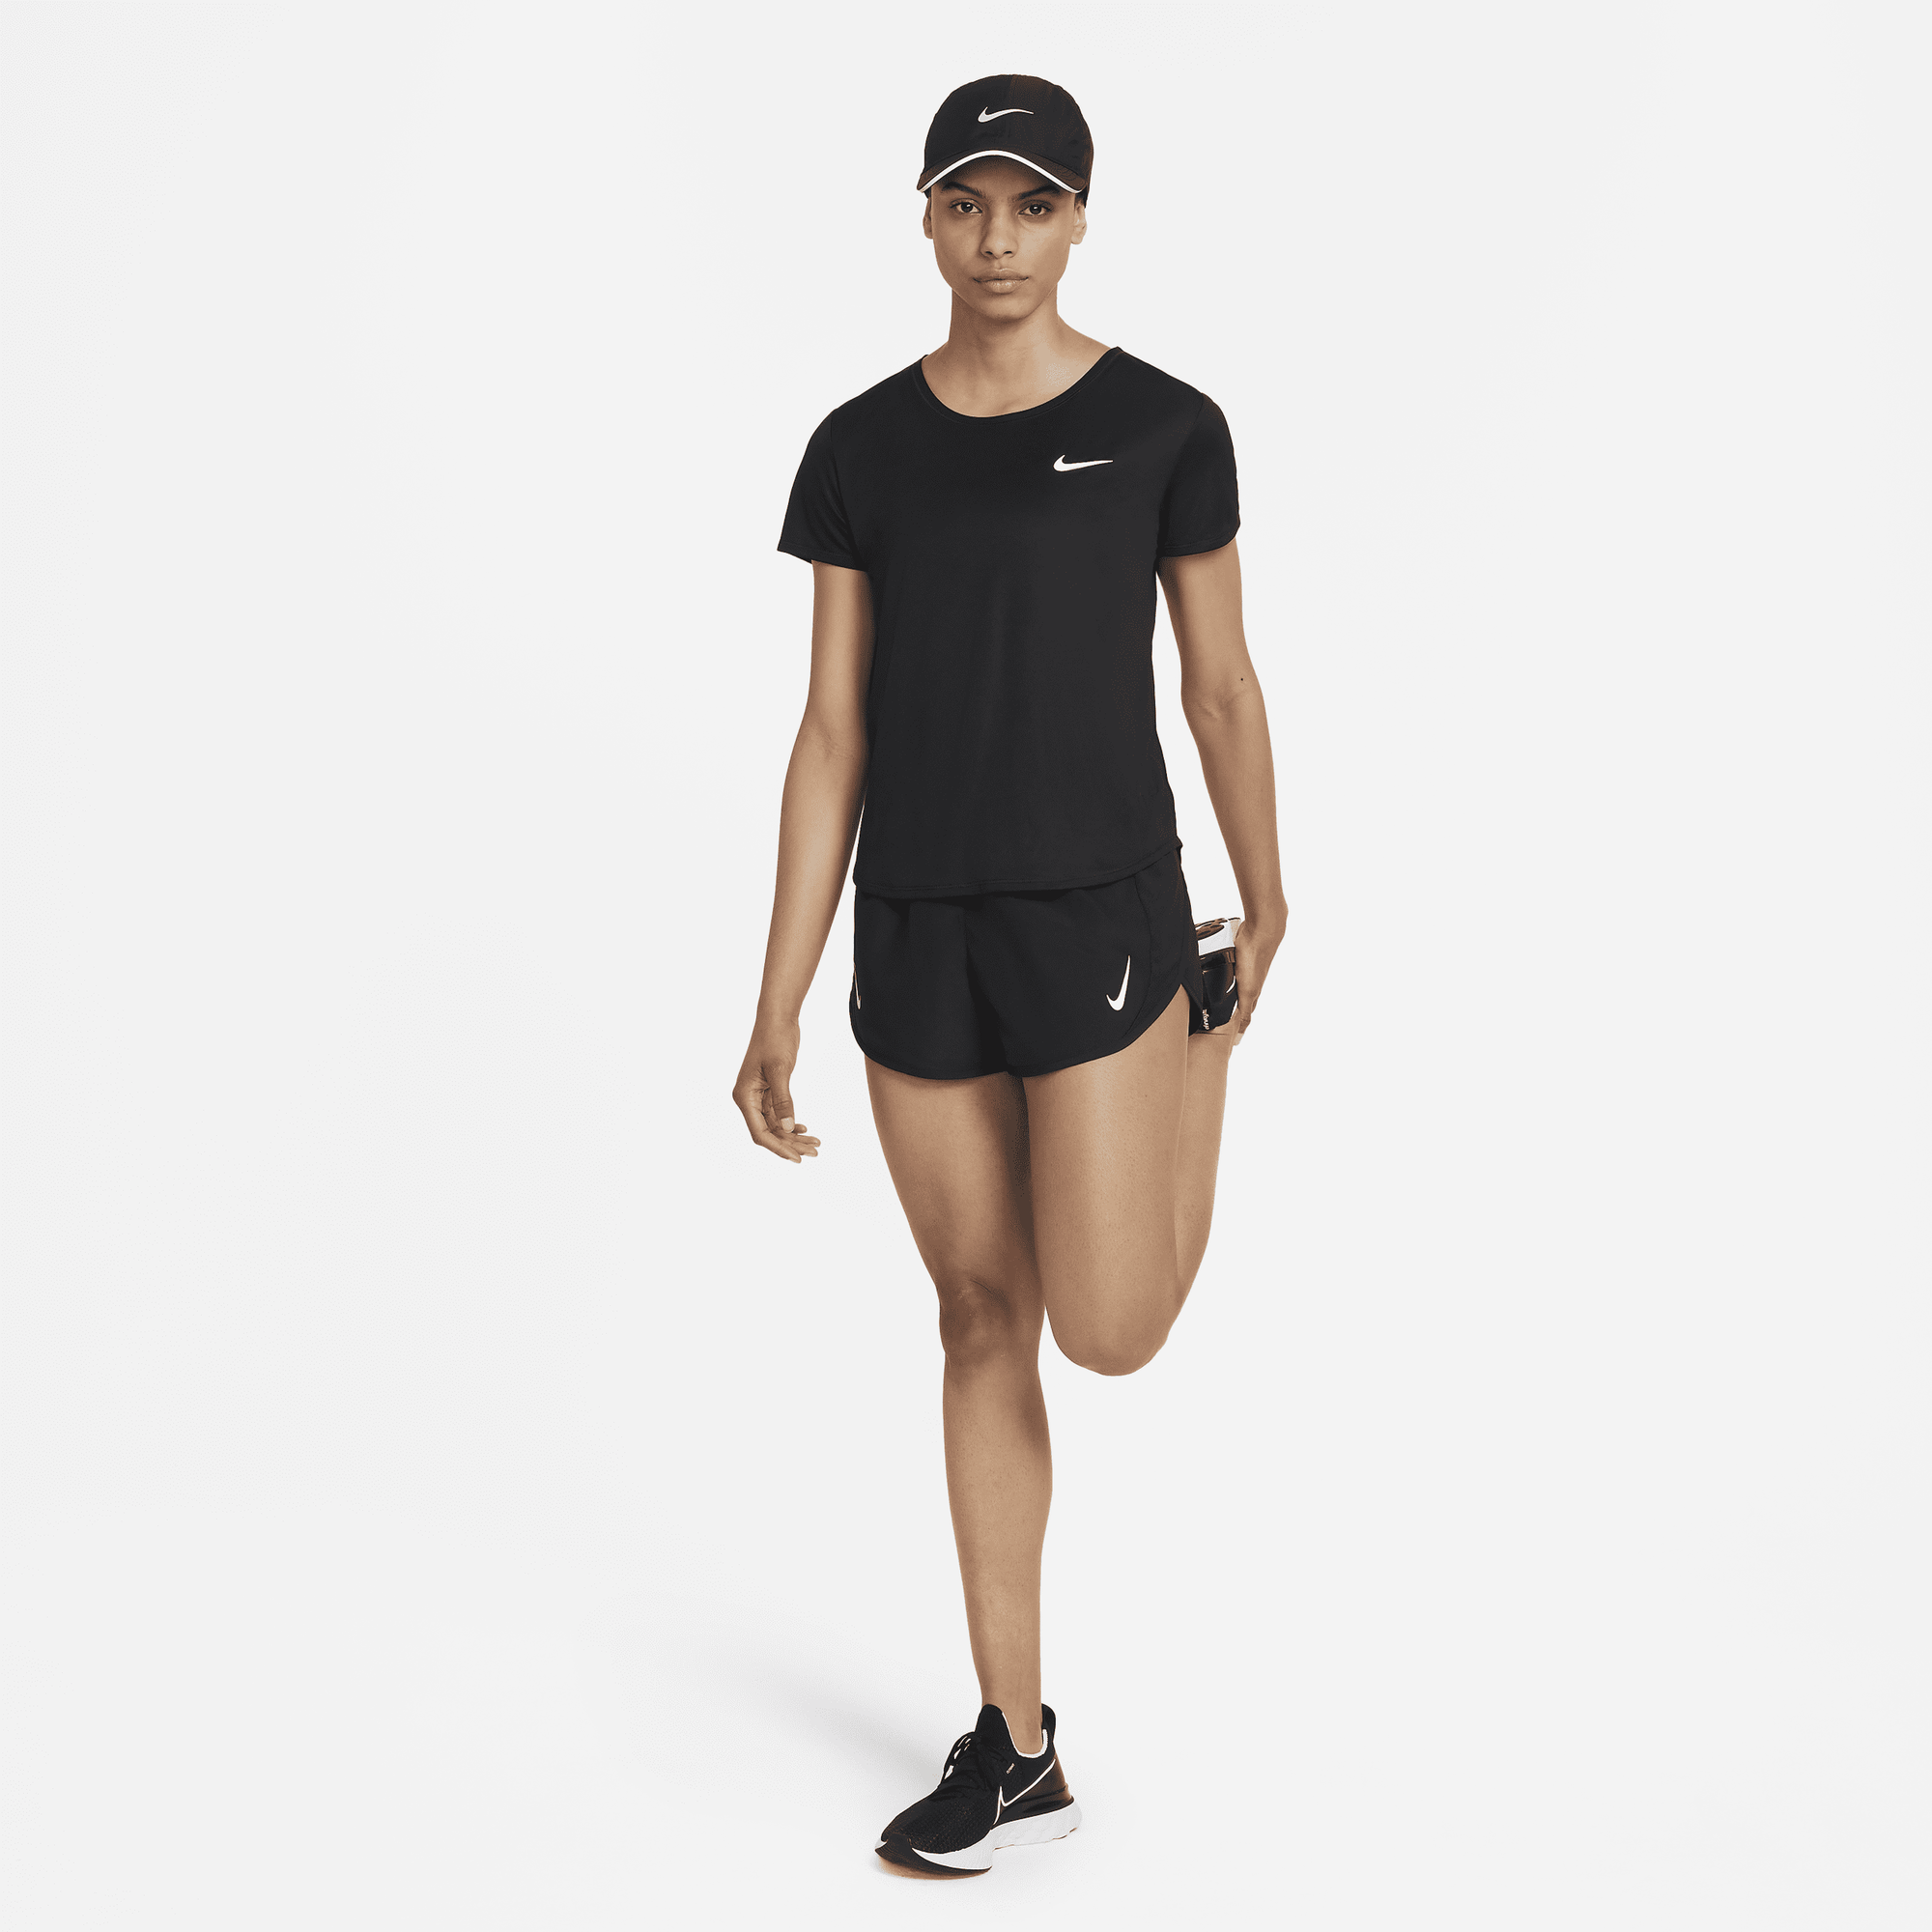 University of Delaware Nike Women's Tempo Running Short – National 5 and 10